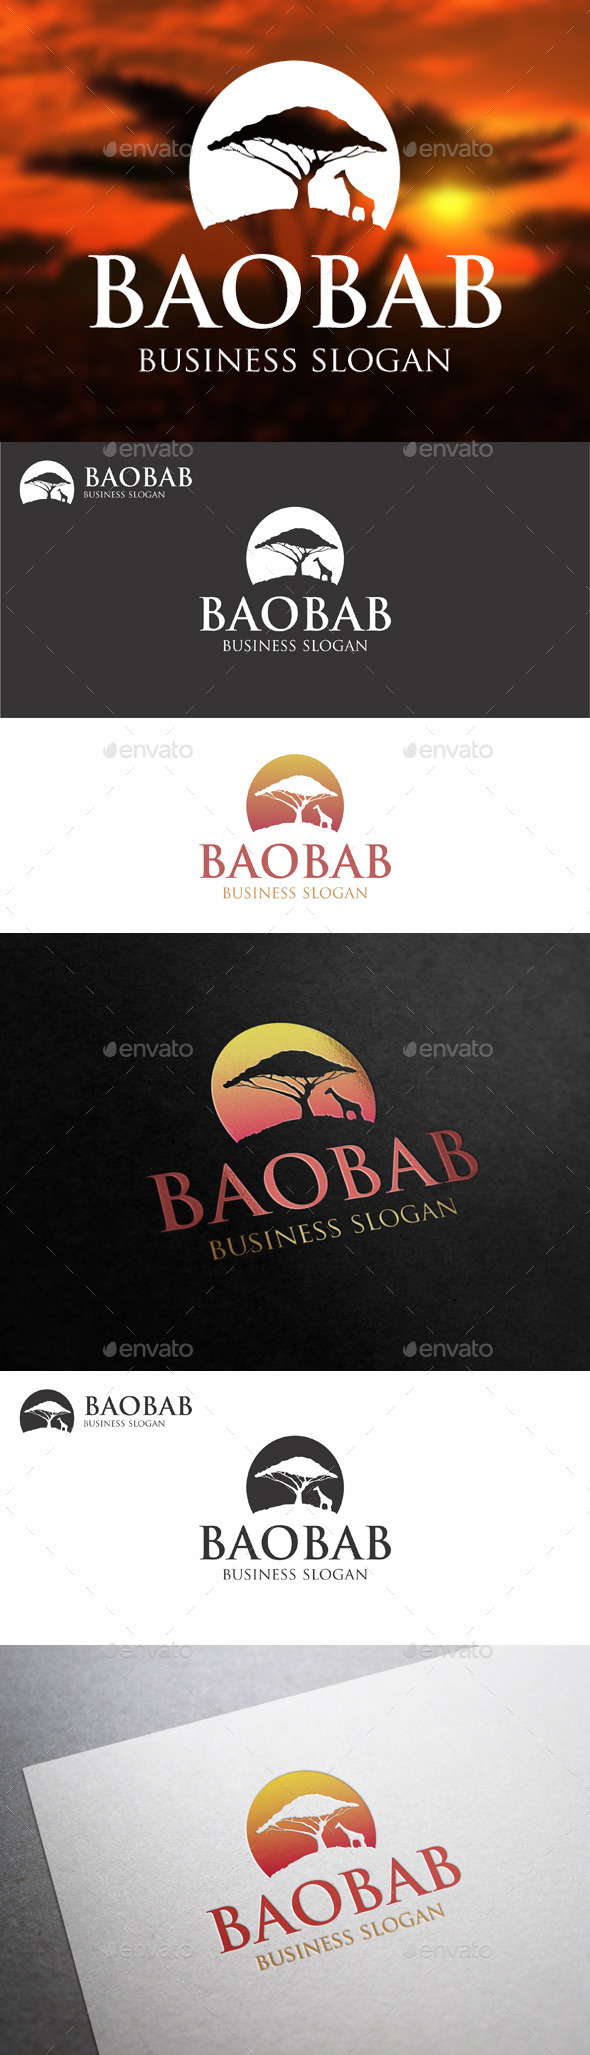 Baobab Tree - African Landscape Logo